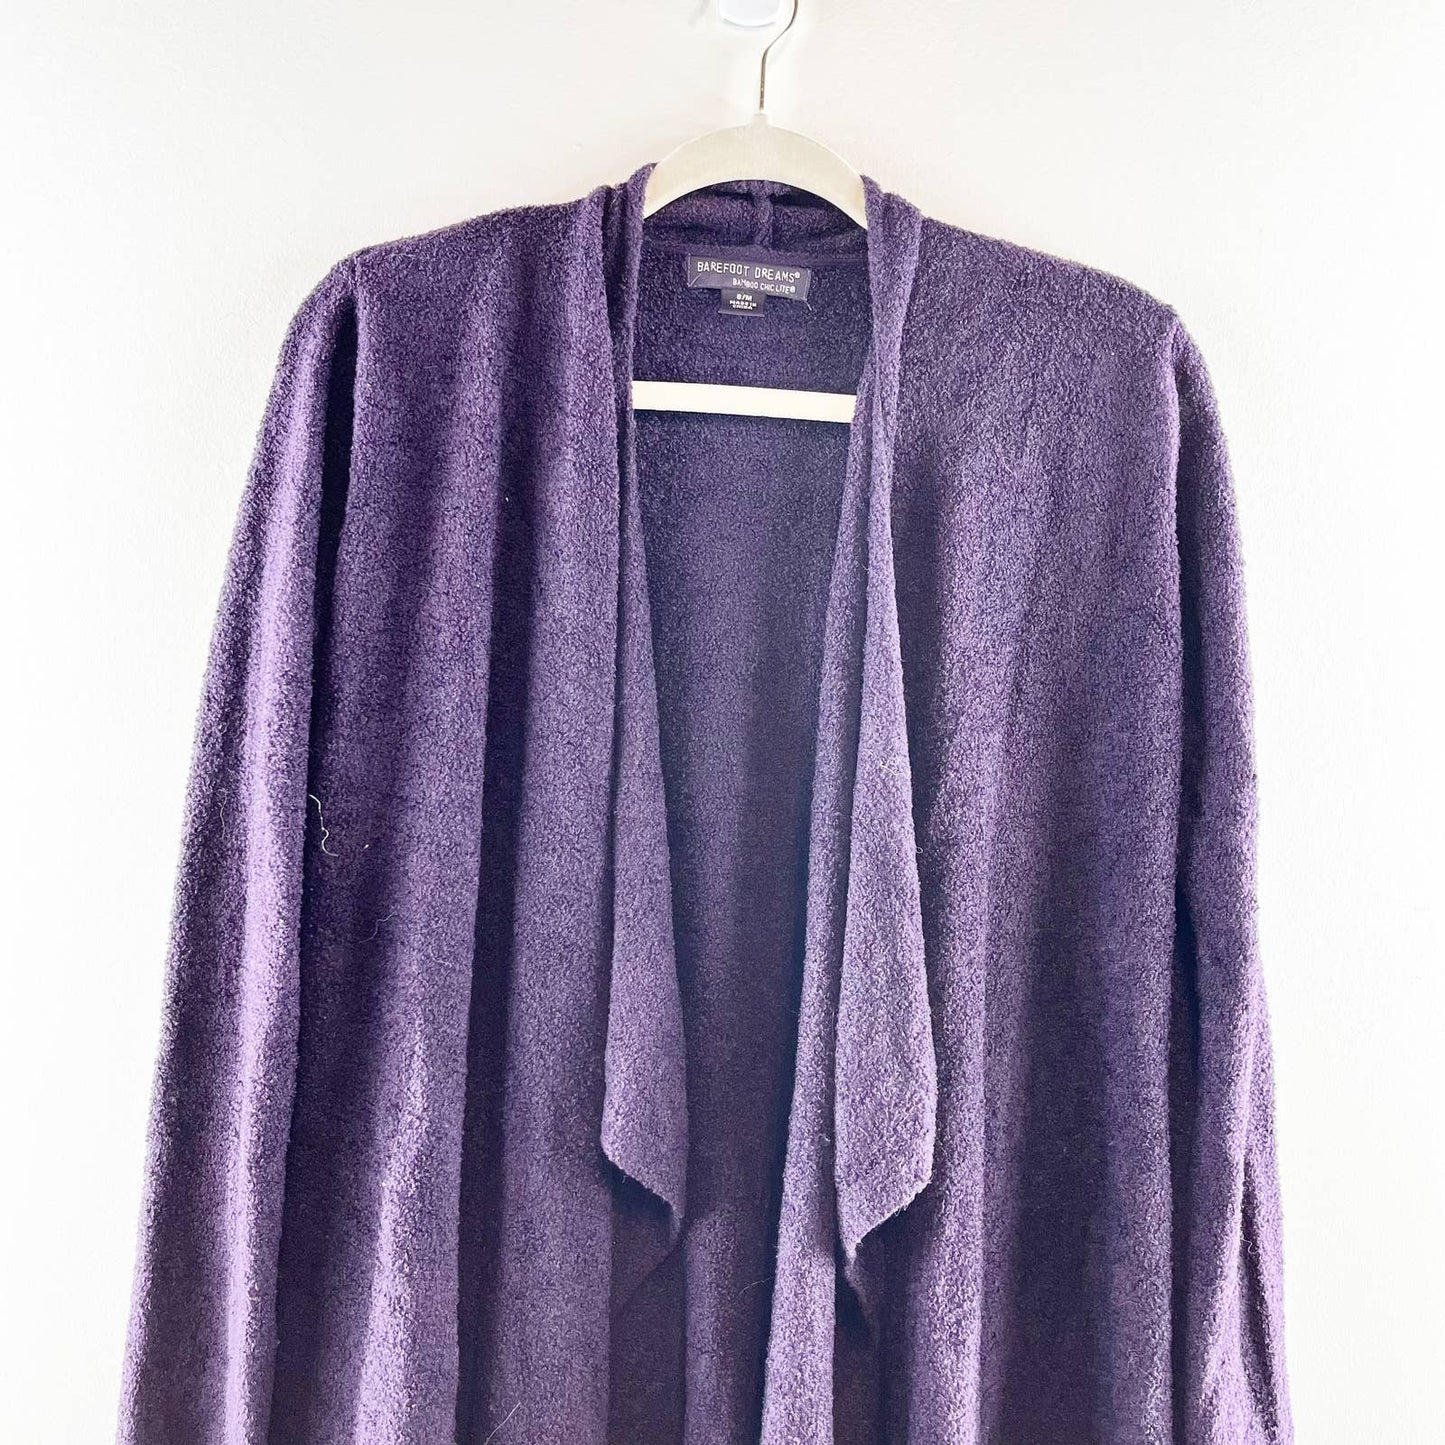 Barefoot Dreams Bamboo Chic Lite Calypso Draped Open Cardigan Sweater Purple S/M